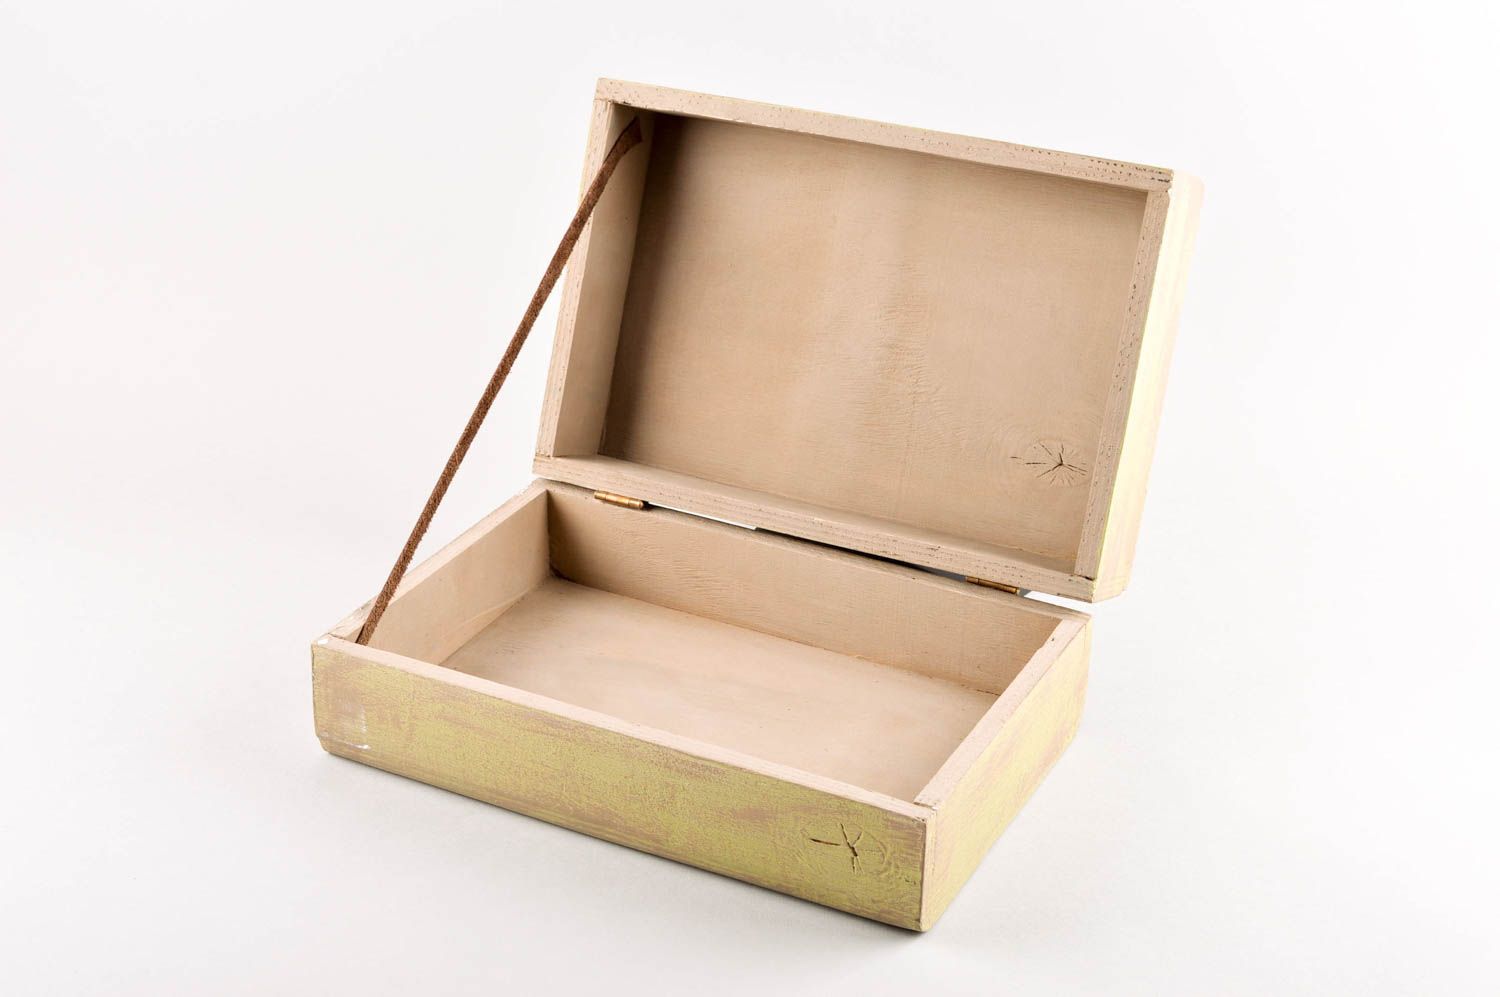 Beautiful handmade wooden box design jewelry box wood craft home decor ideas photo 5